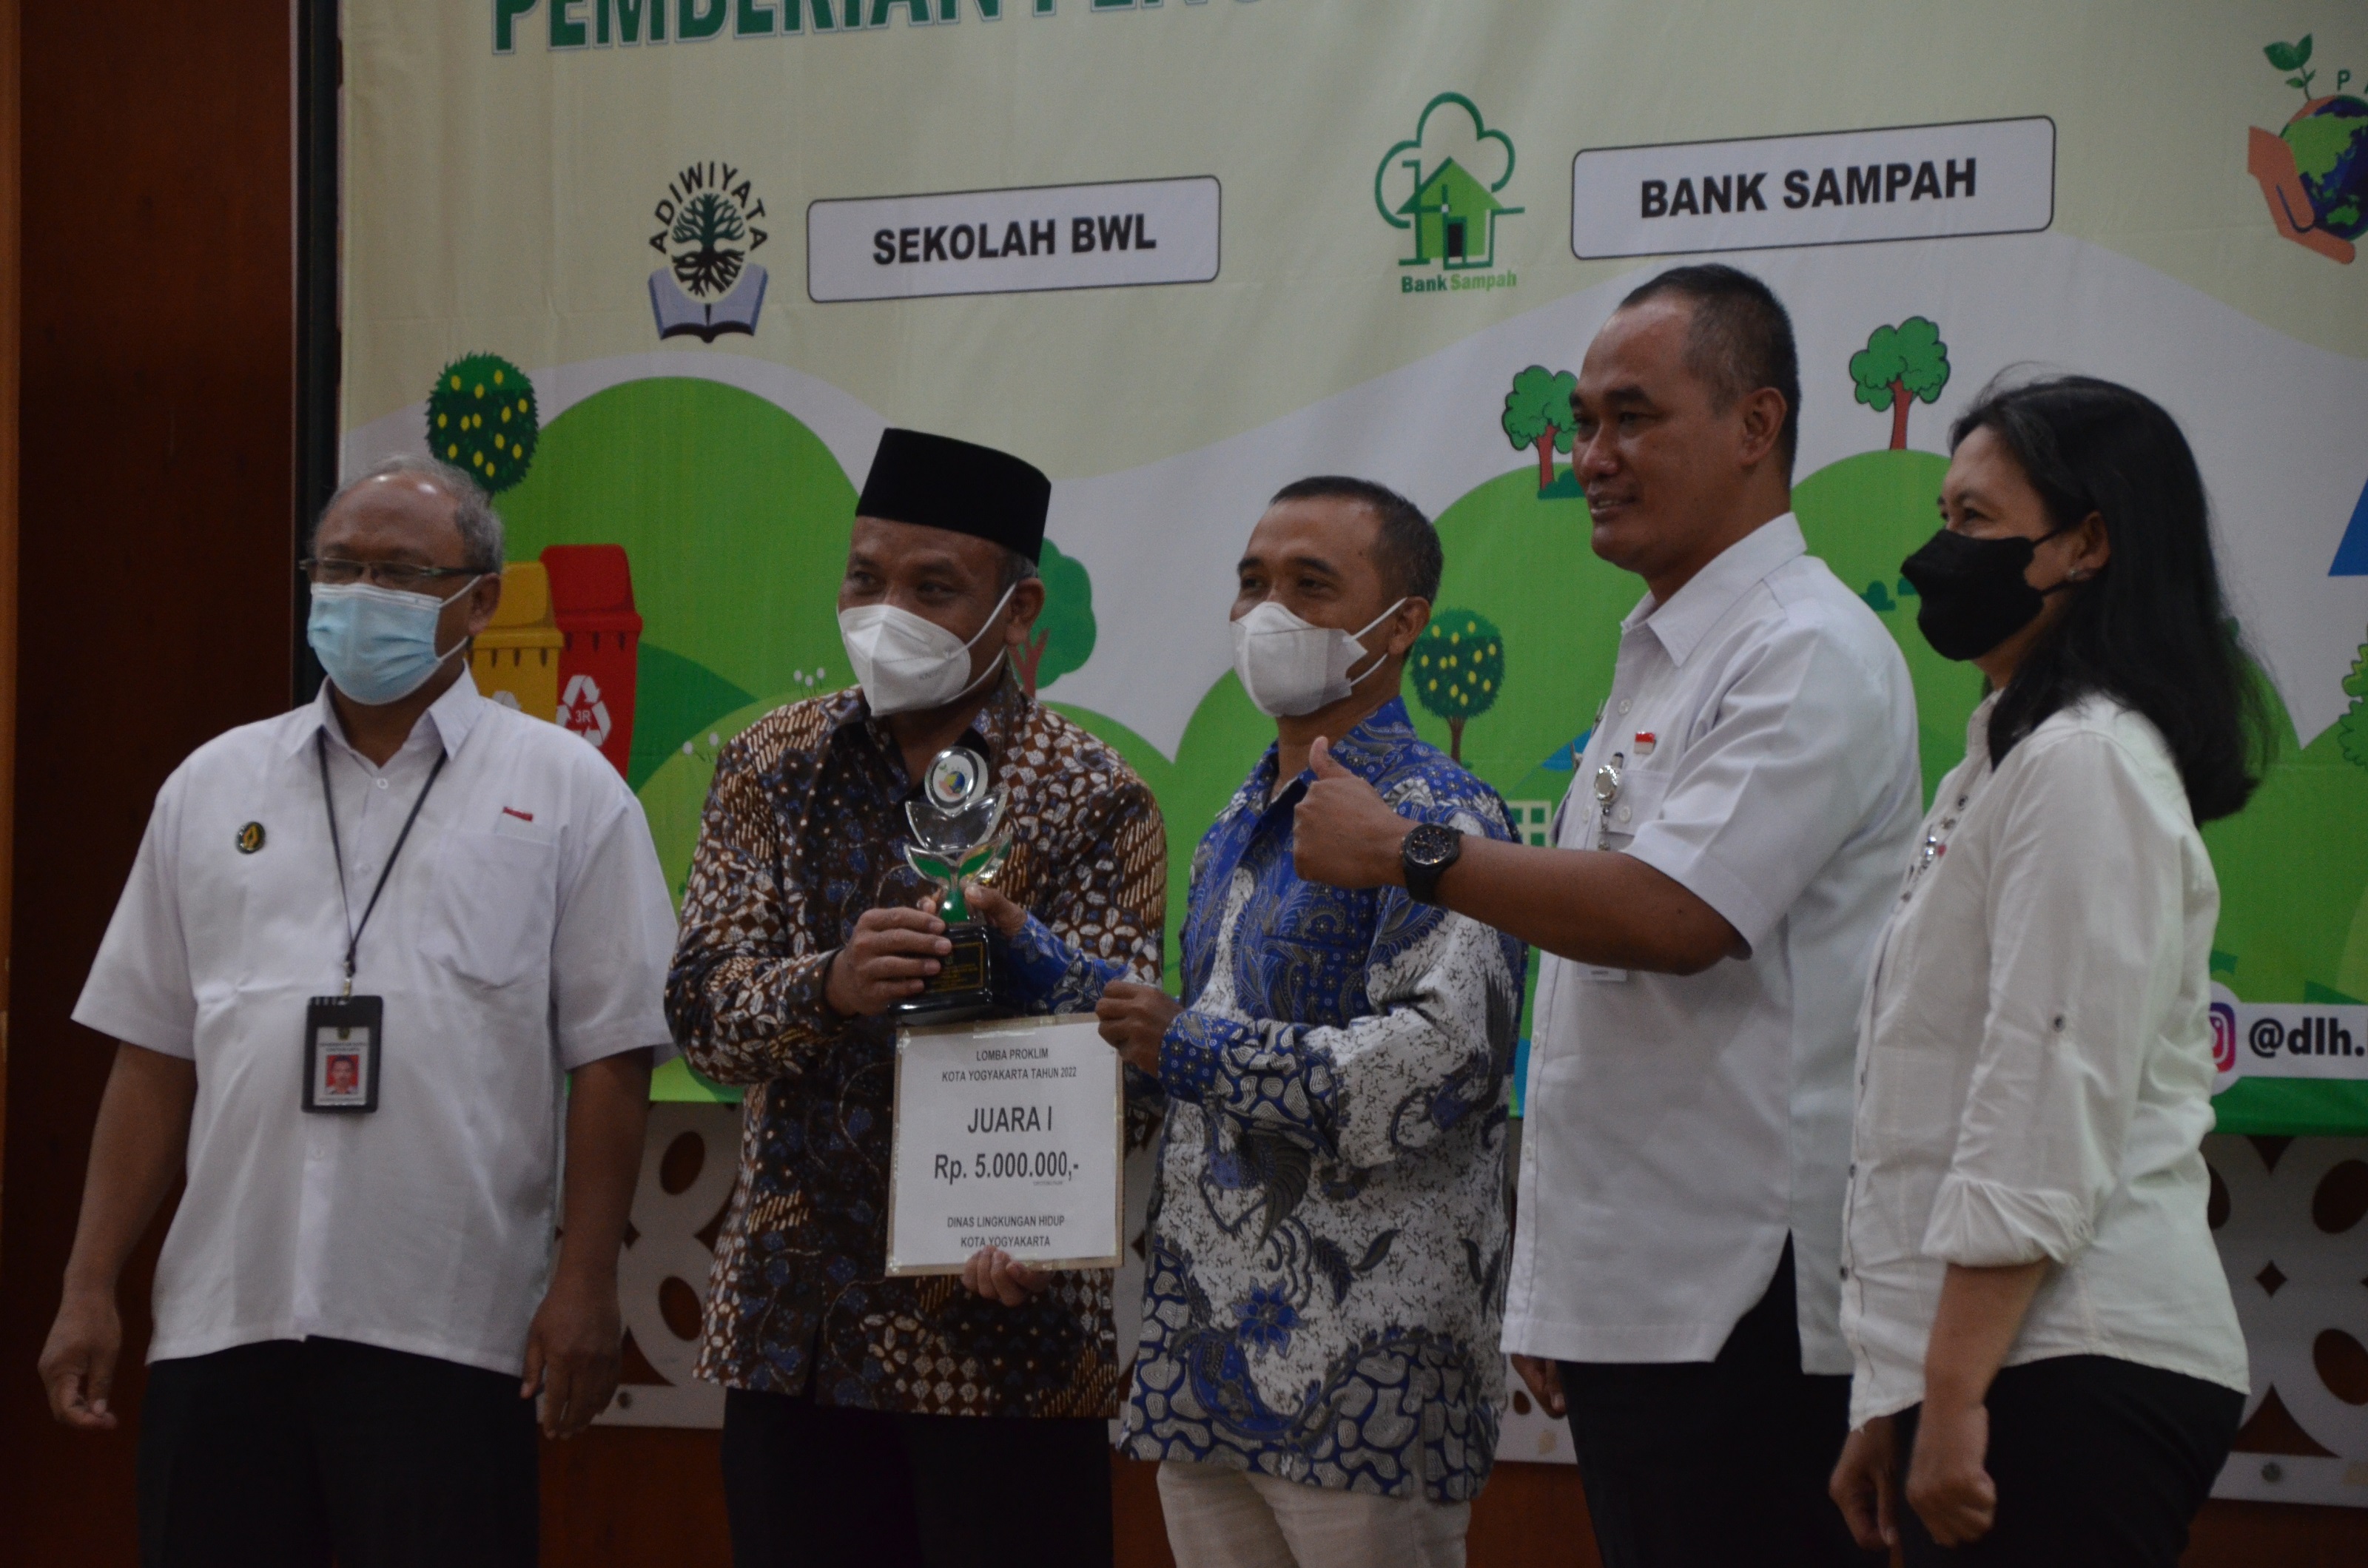 Anugerah Lingkungan Kota Yogya, Dorong Kolaborasi Masyarakat Jaga Kelestarian Lingkungan